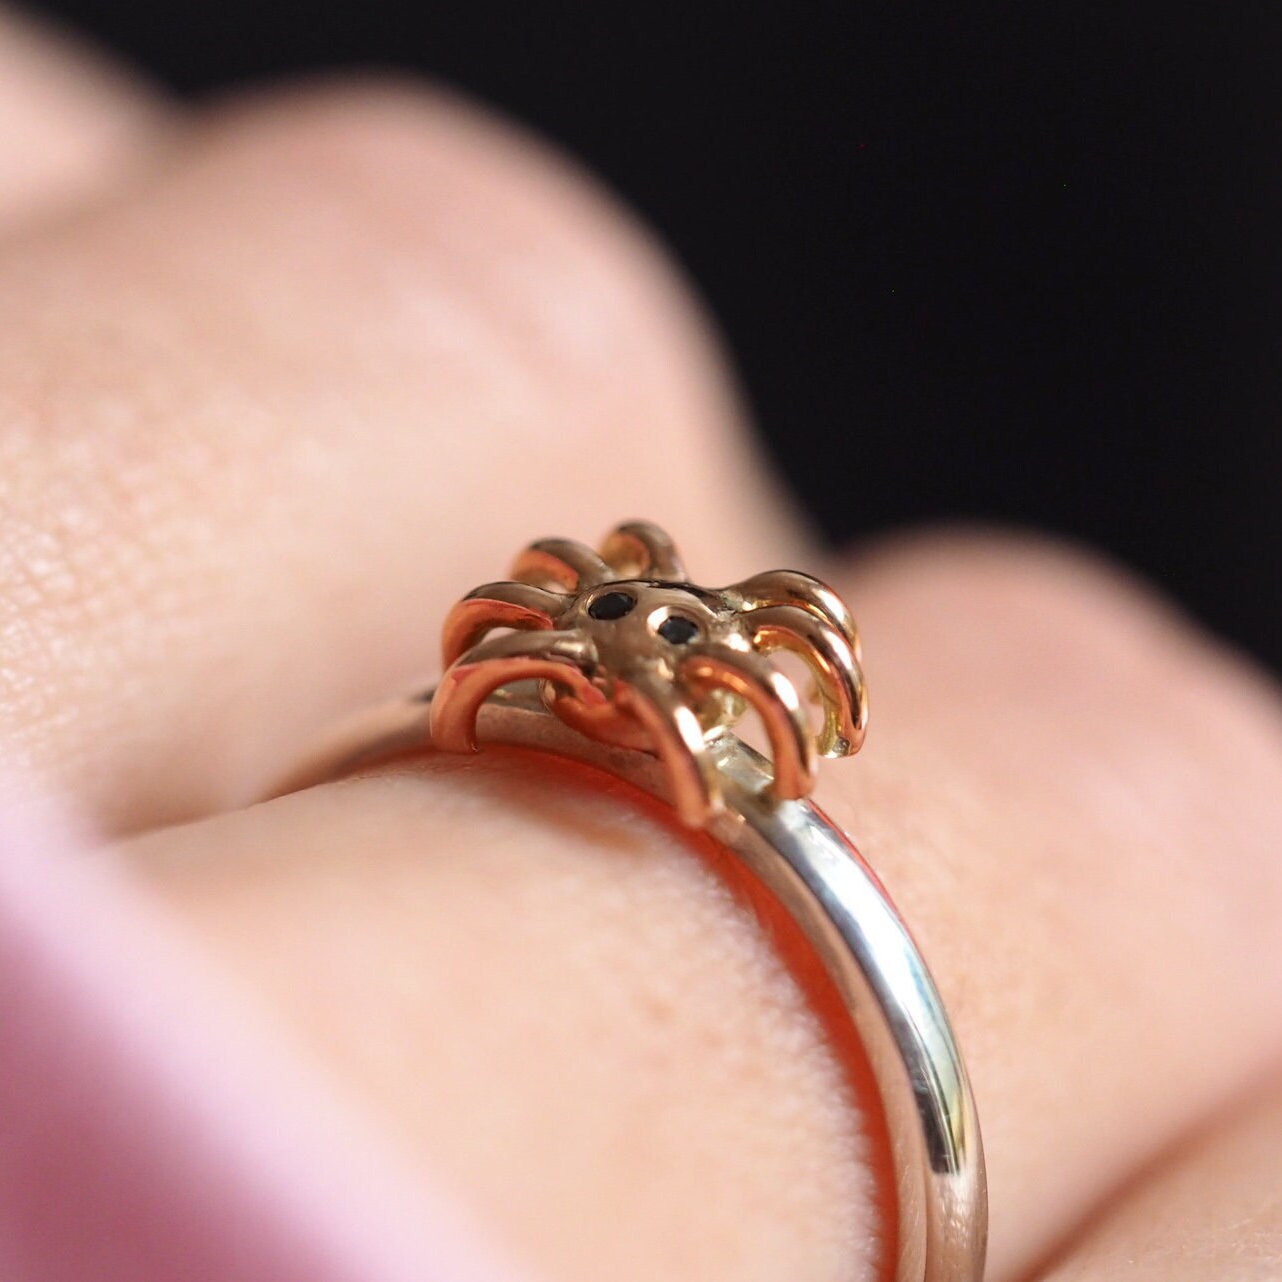 Tiny Spider Ring